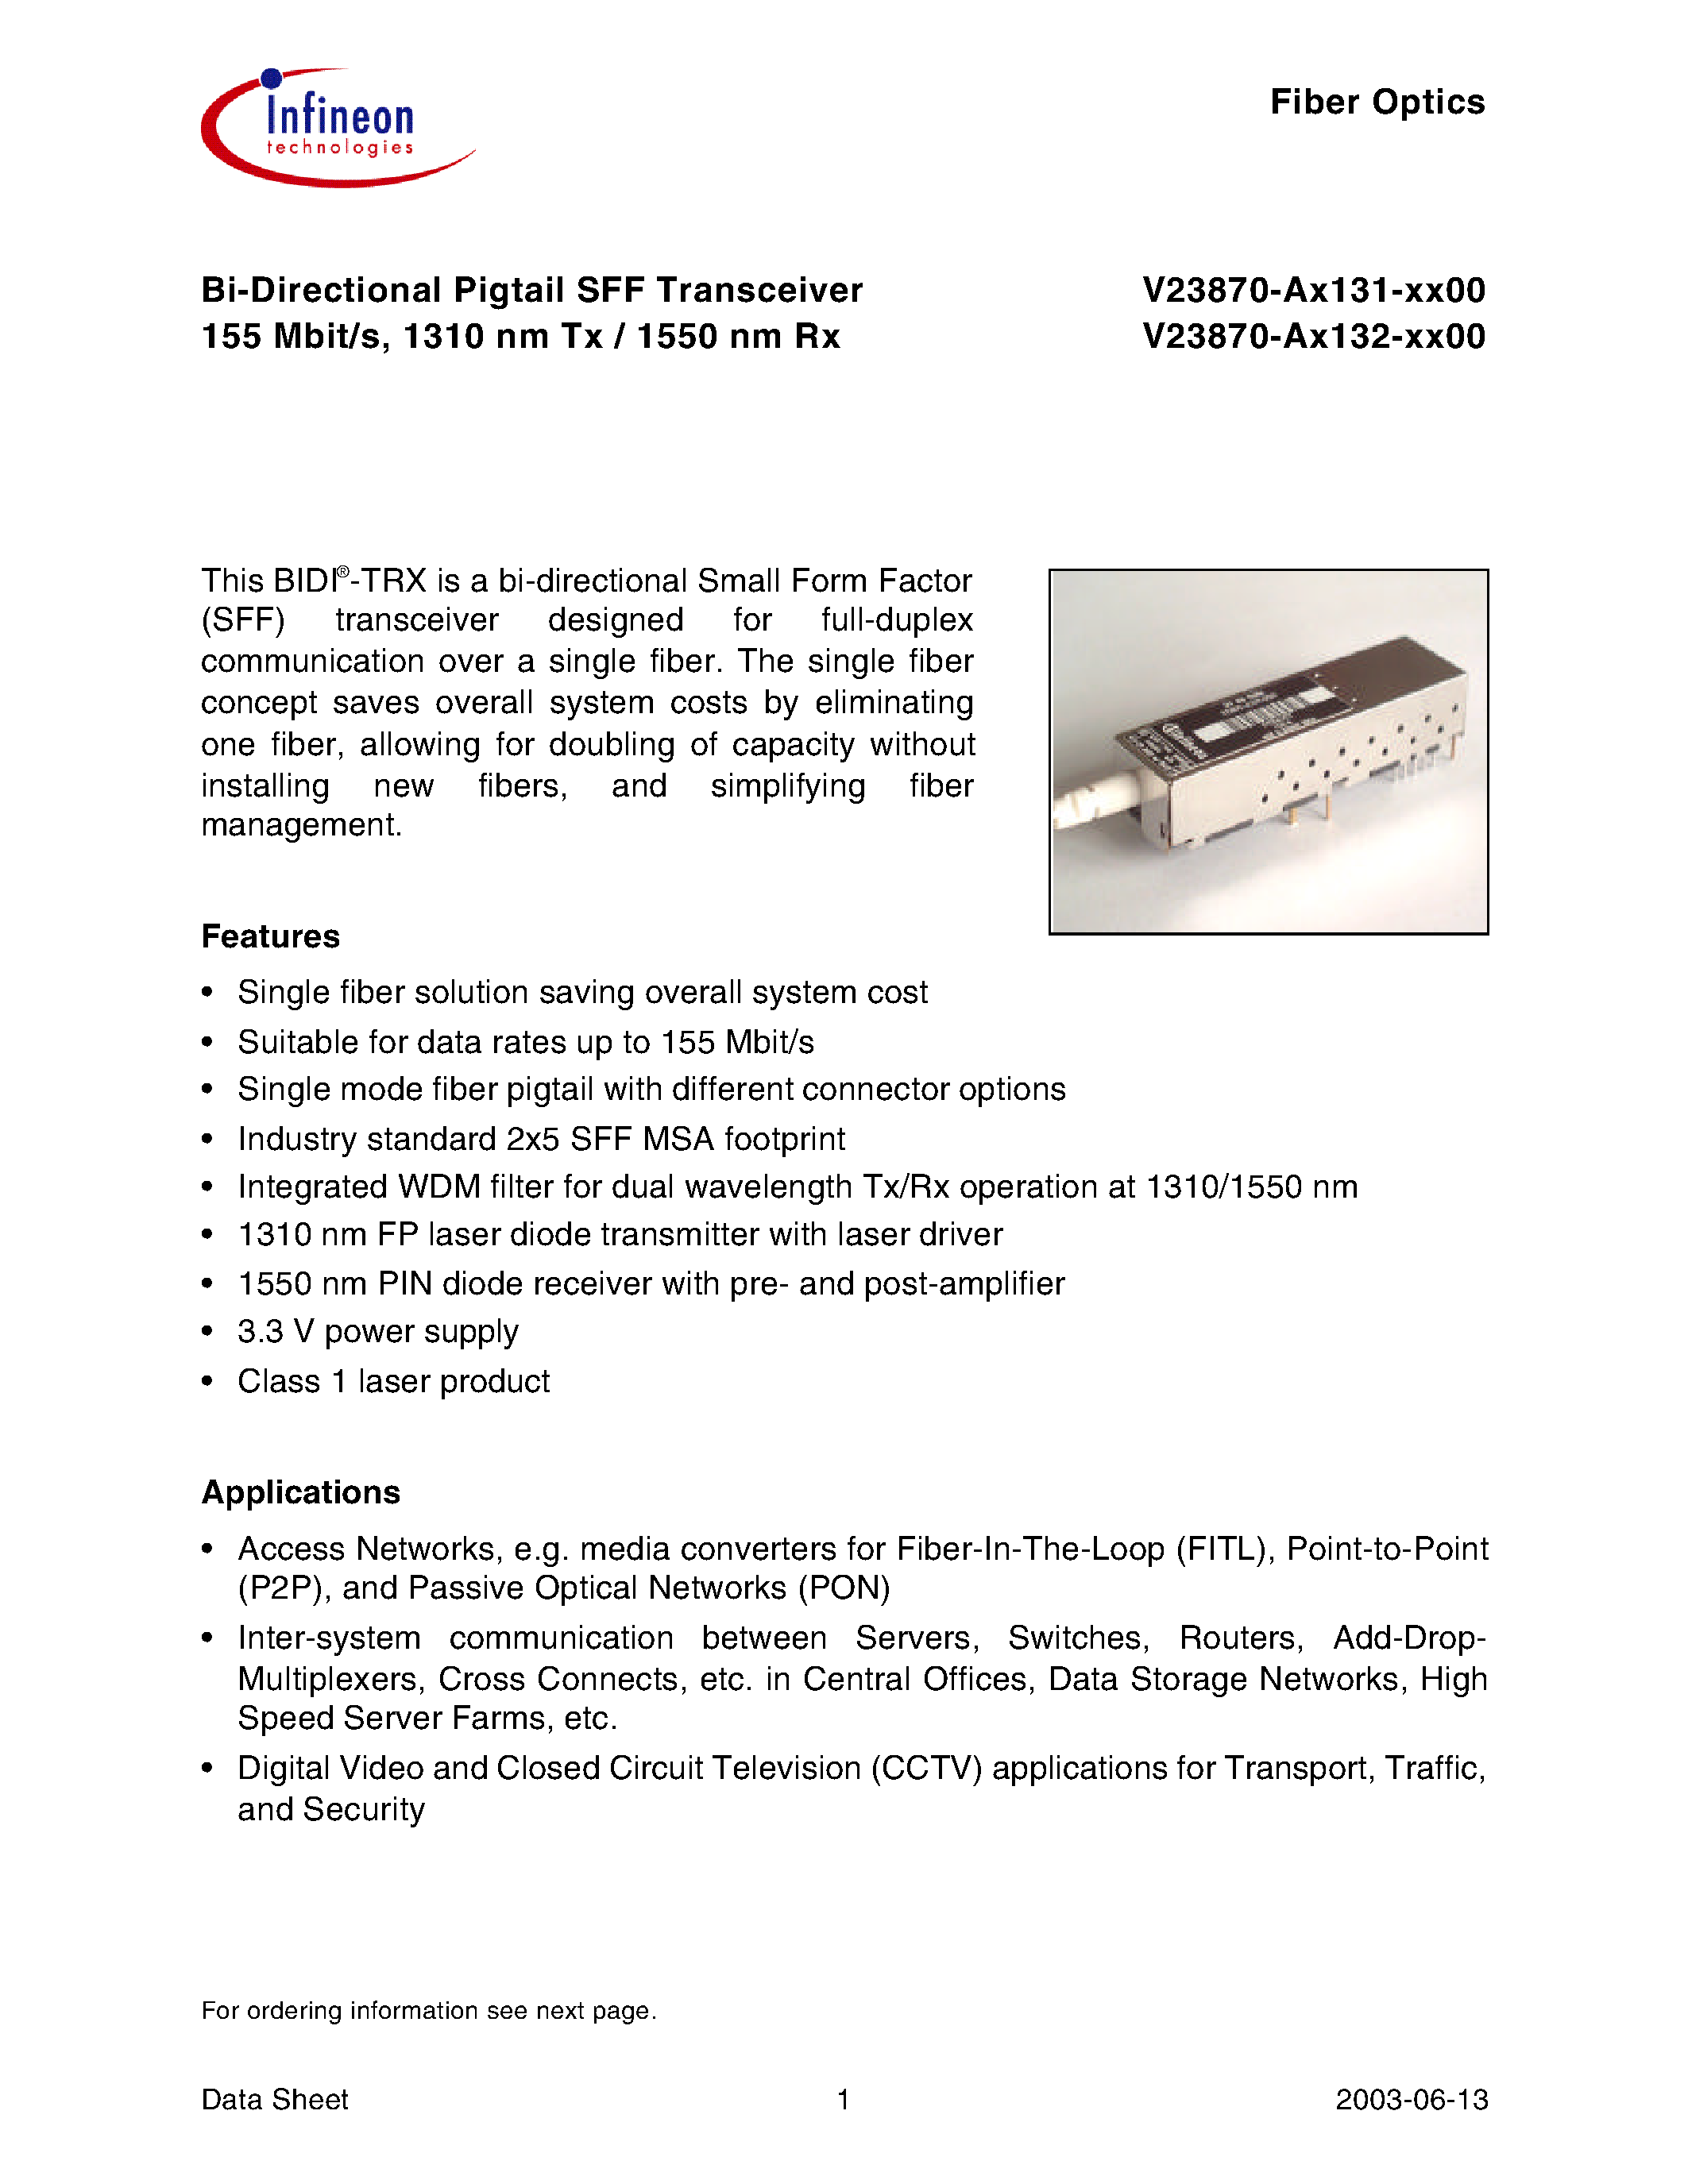 Даташит V23870-A3131-A500 - Bi-Directional Pigtail SFF Transceiver 155 Mbit/s/ 1310 nm Tx / 1550 nm Rx страница 1